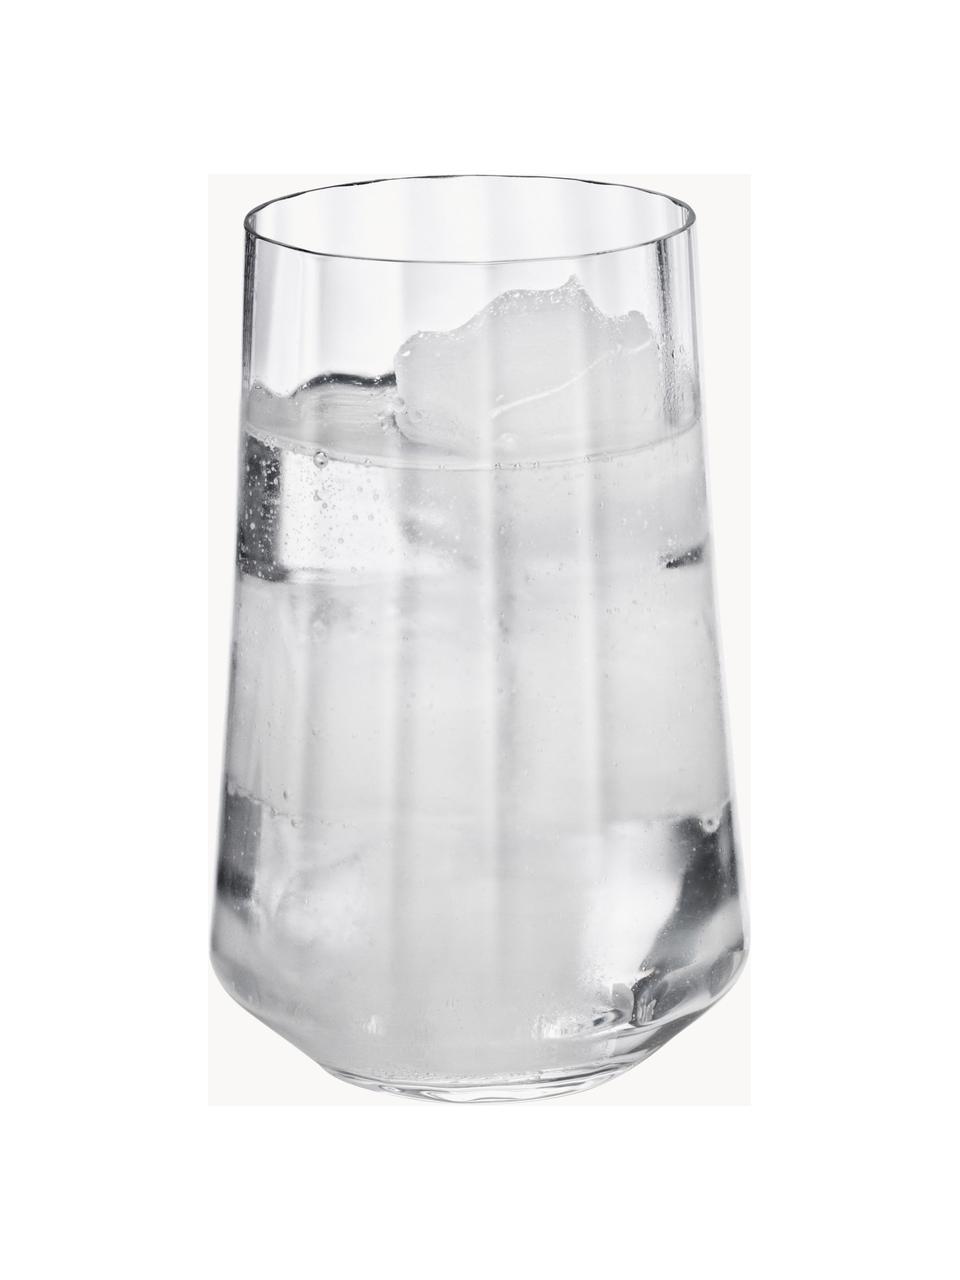 Vasos de cristal con relieves Bernadotte, 6 uds., Cristal, Transparente, Ø 8 x Al 12 cm, 380 ml